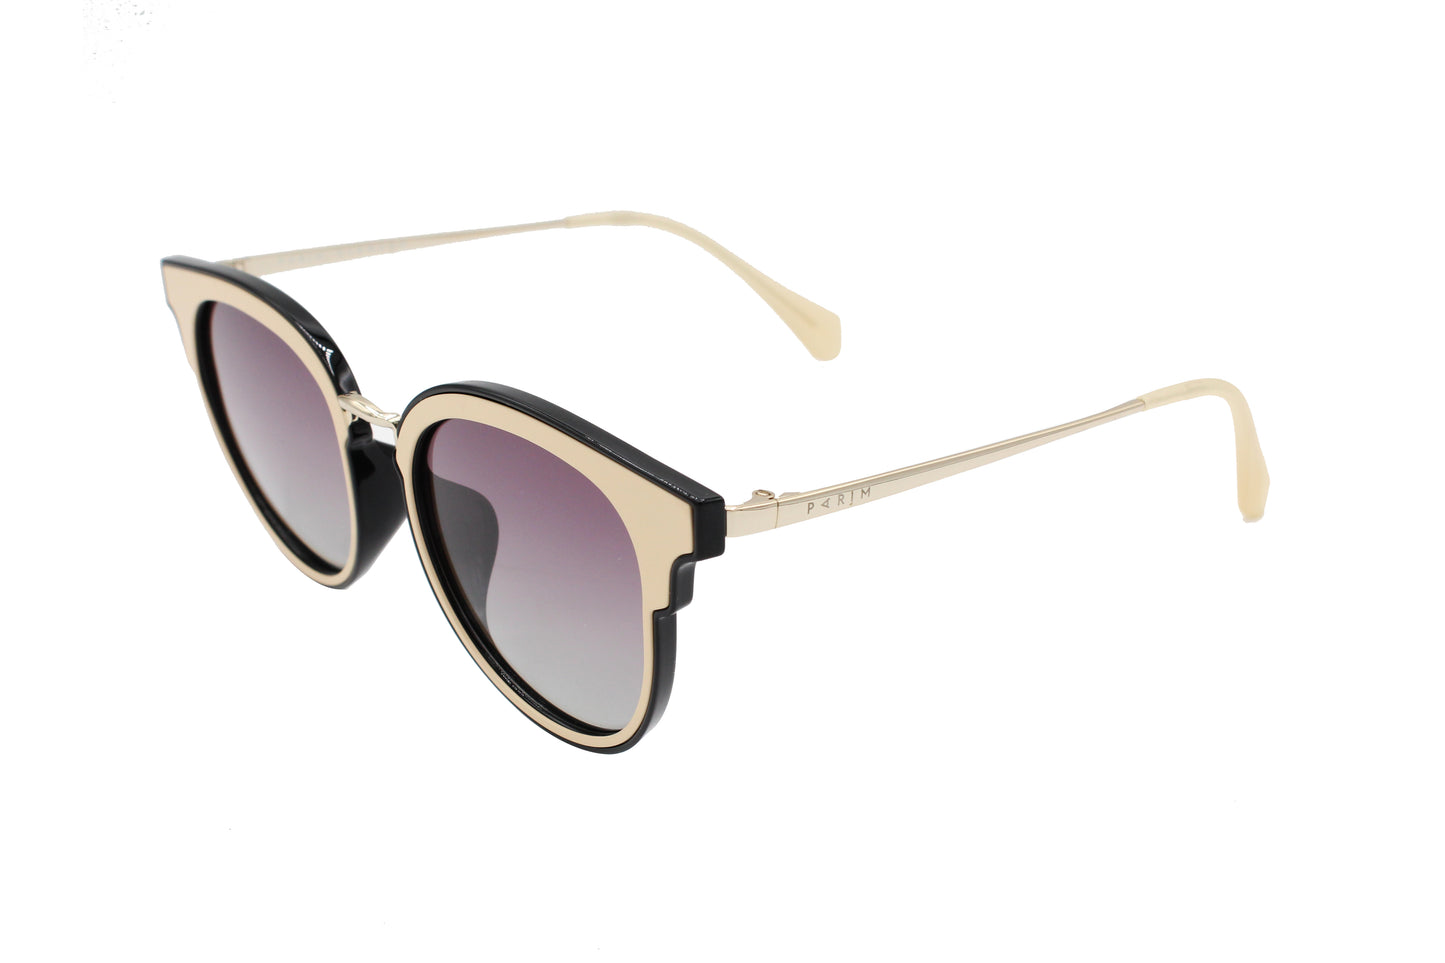 NS Deluxe - 73404 - Cream - Sunglasses